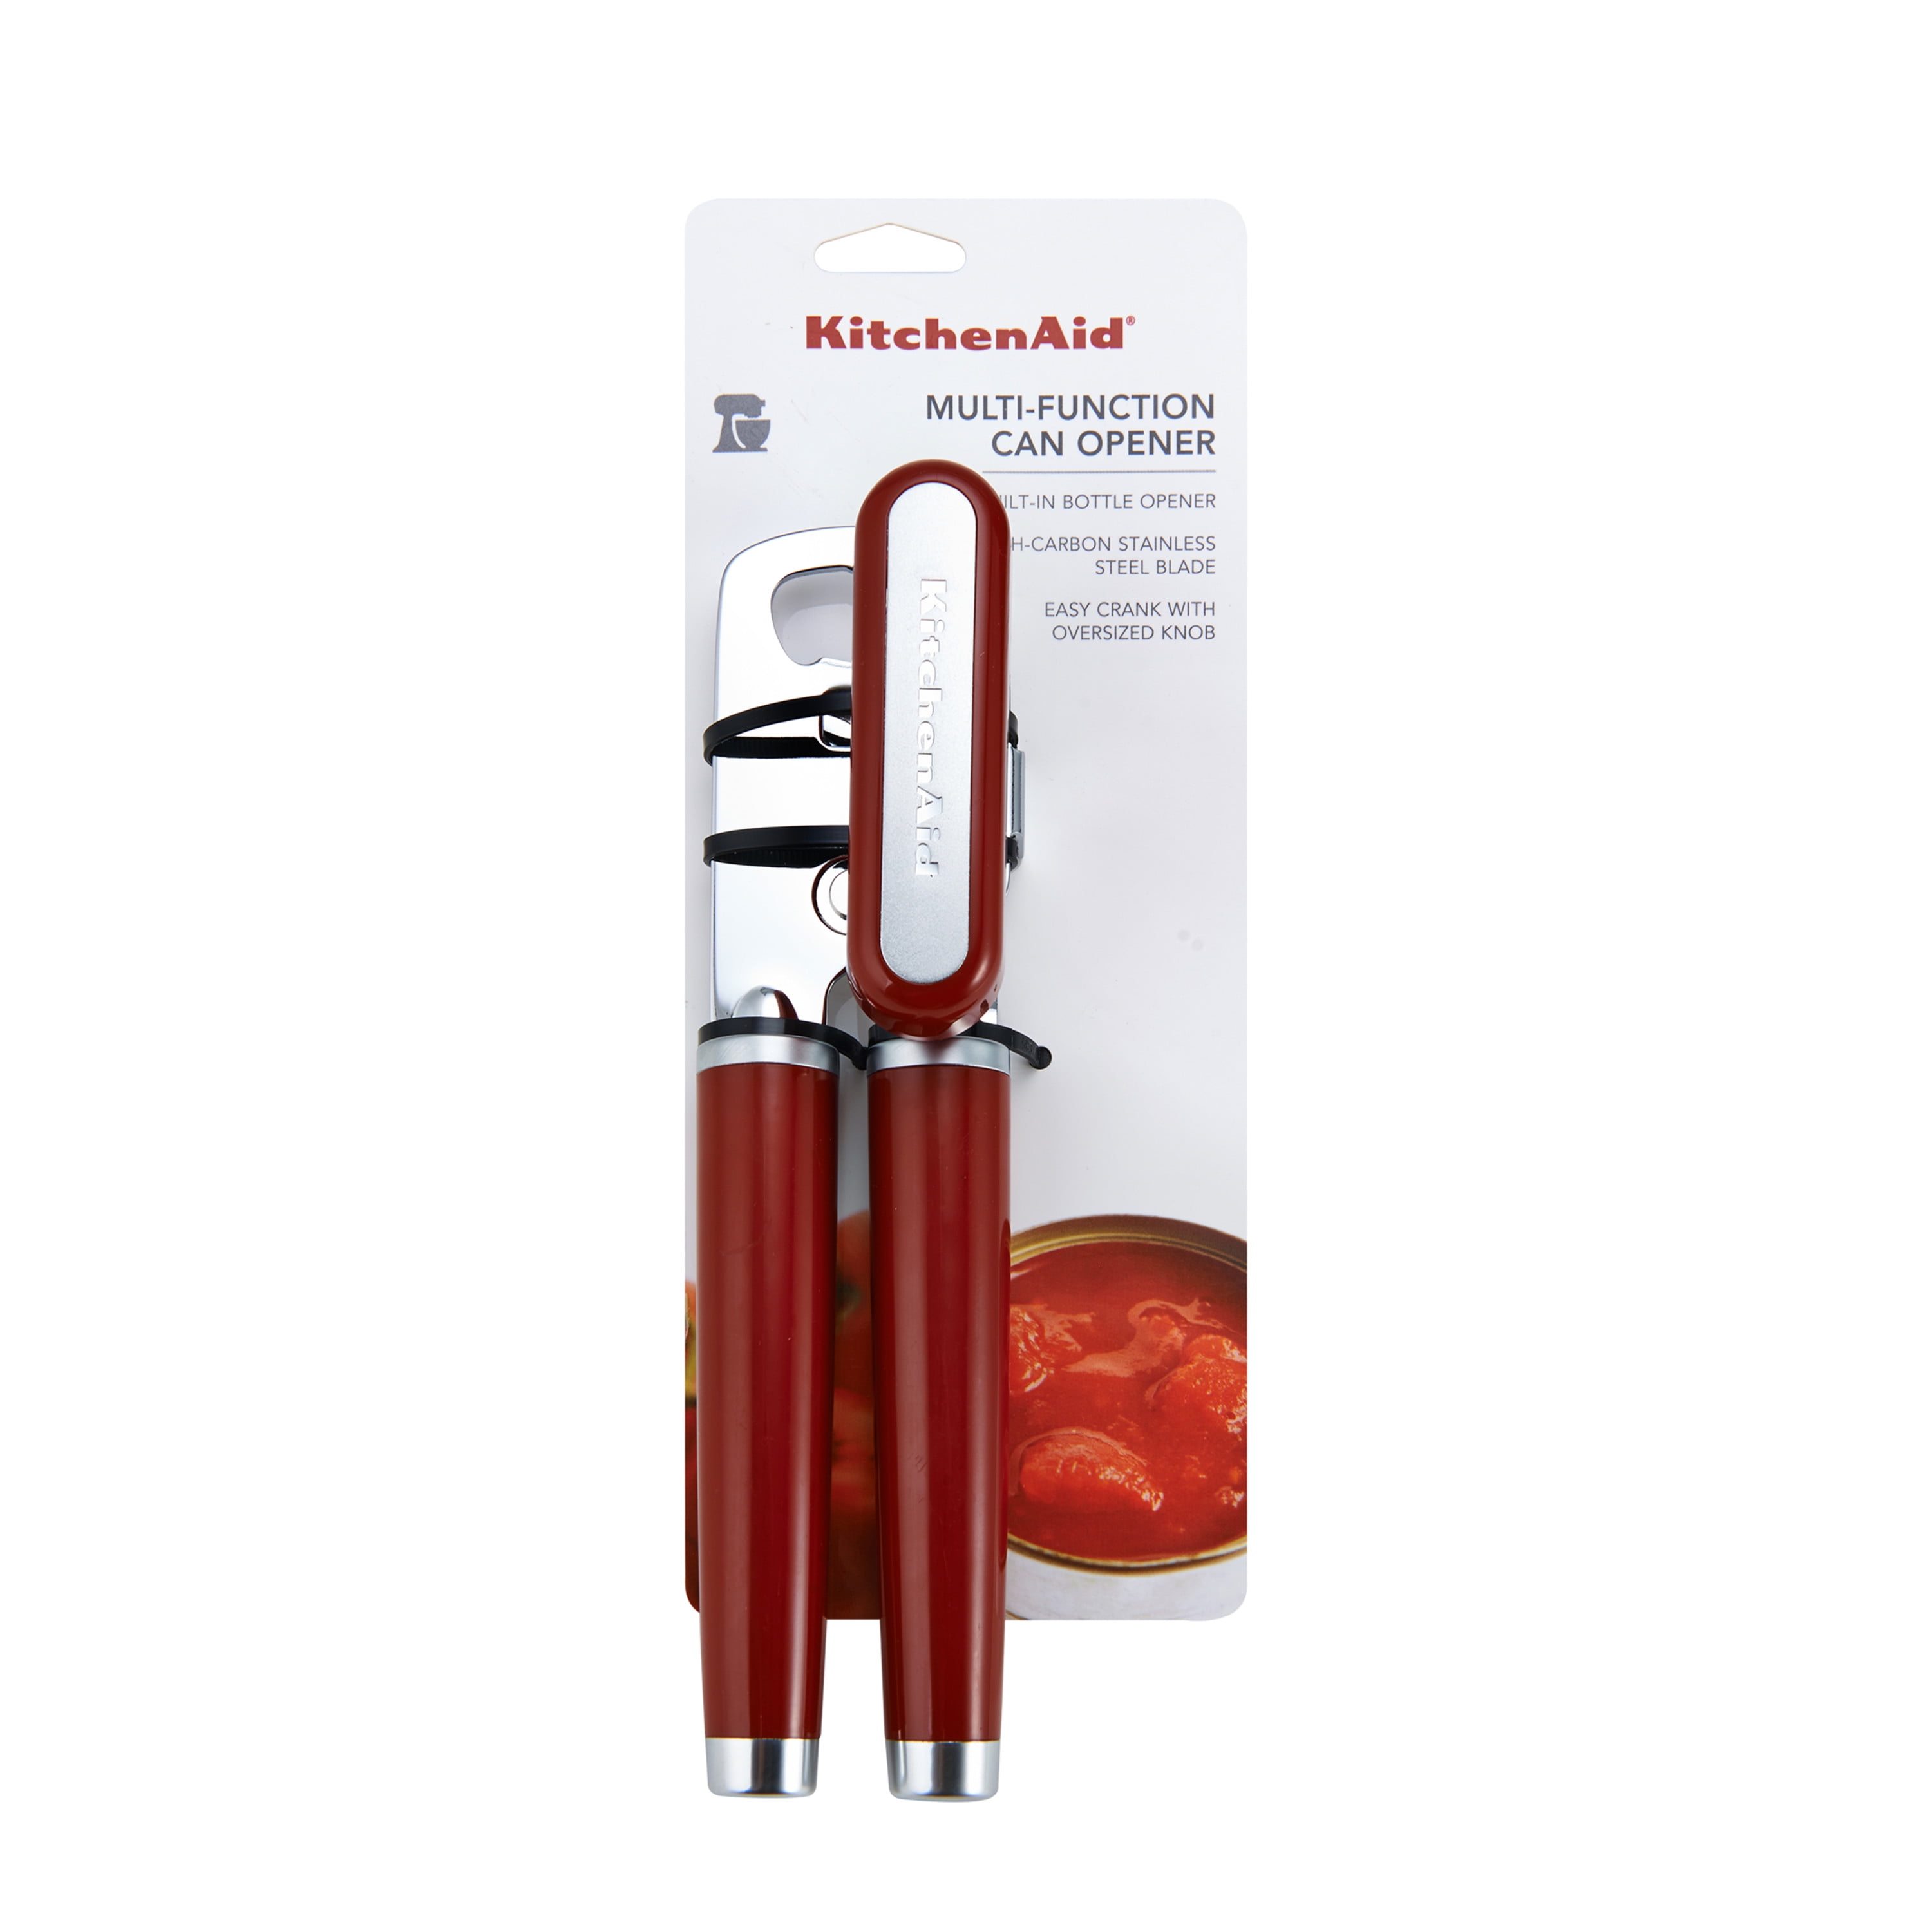 KitchenAid Miscellaneous Kitchen Tools - Empire Red 15-Piece Tool